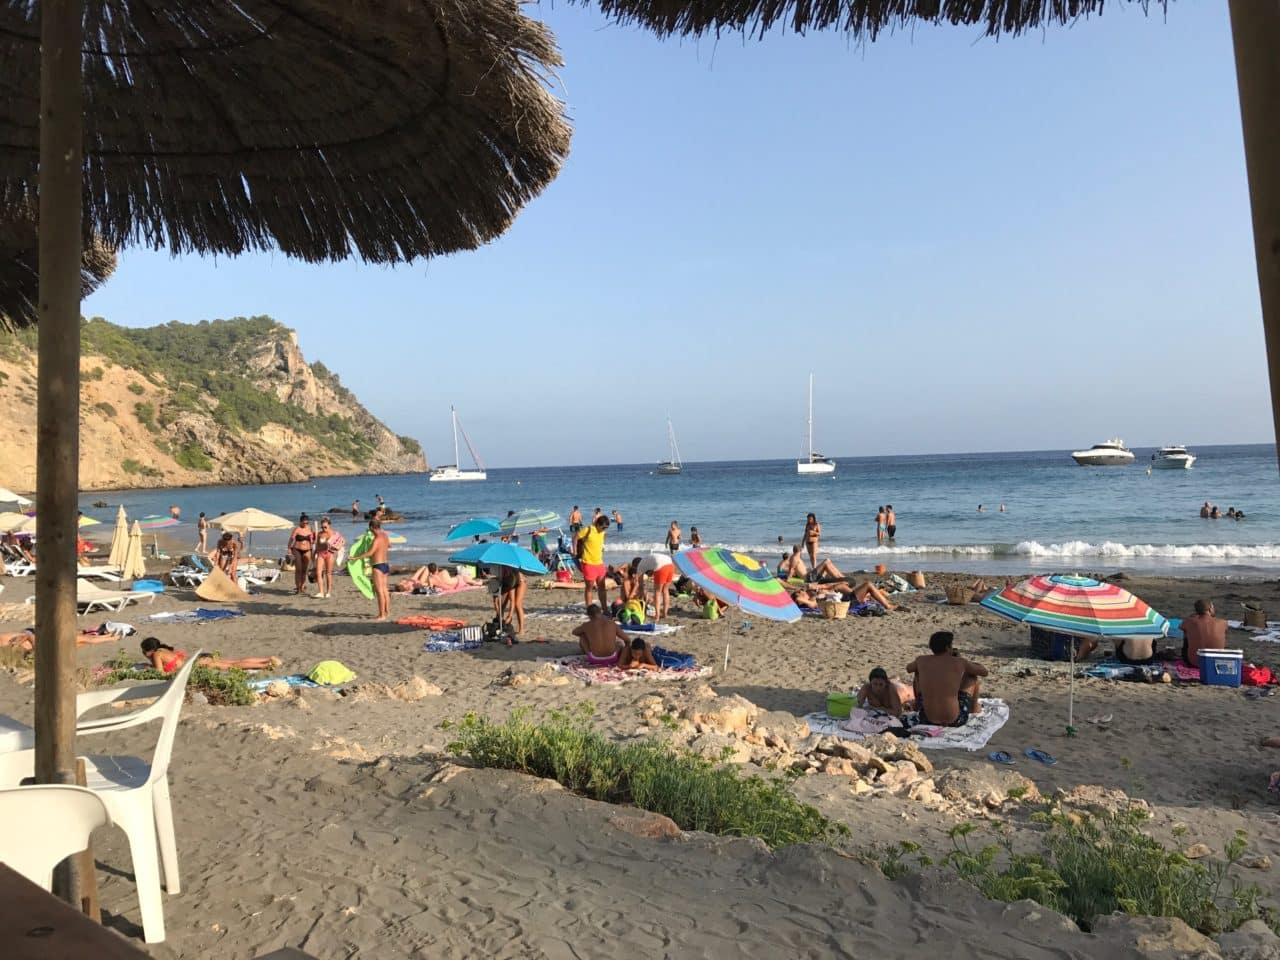 People Sun Bathing On A Beach With Umbrellas